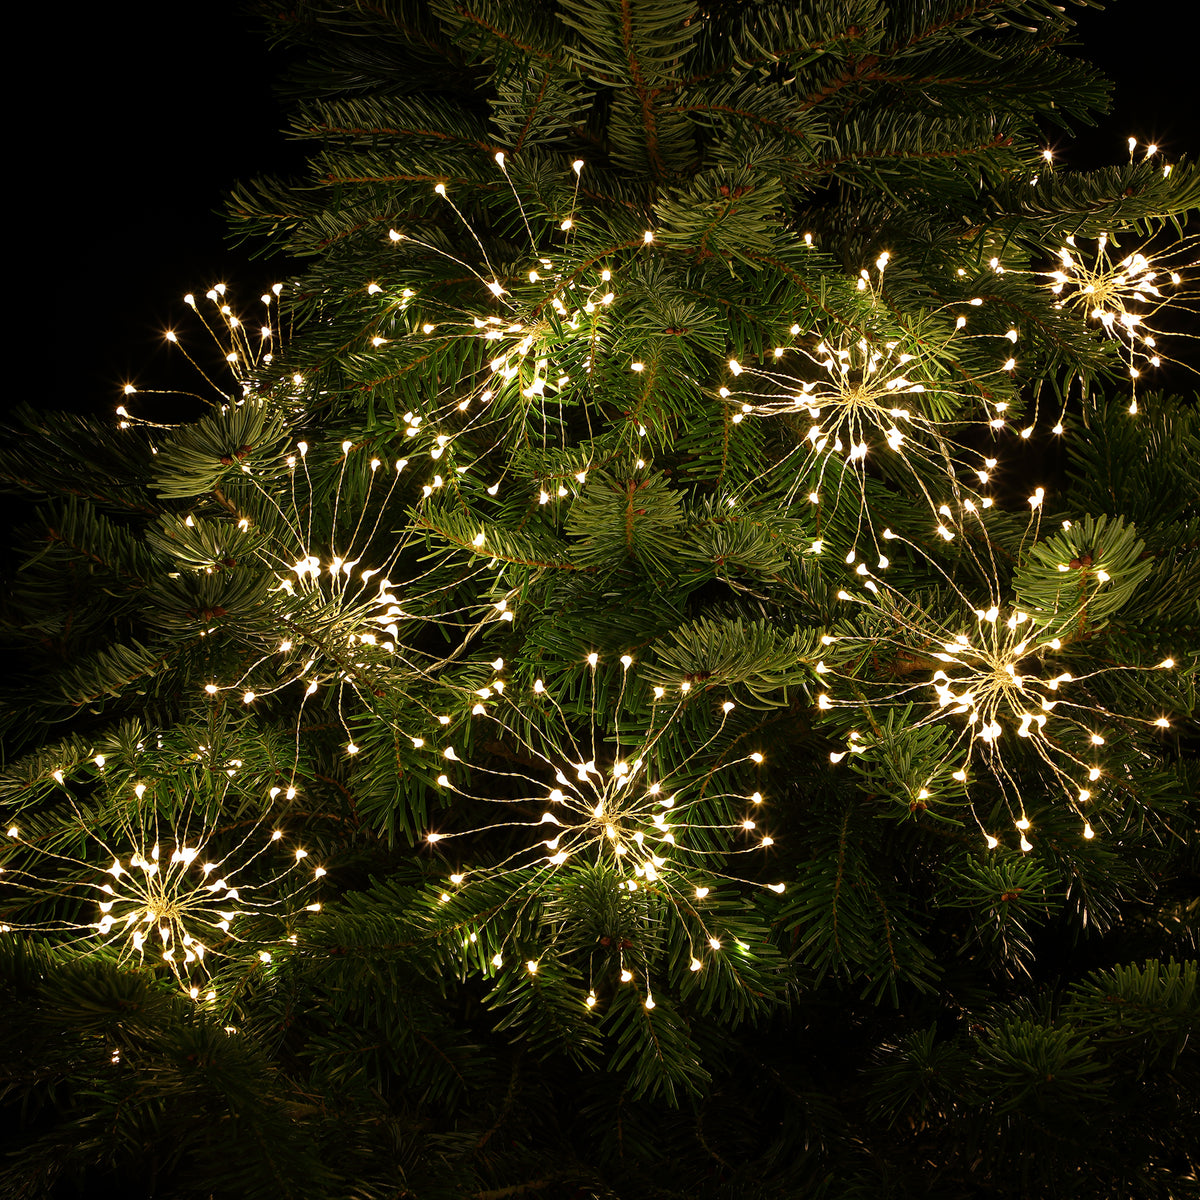 Noma Christmas 10 Medium Firework String Lights with 600 Warm White LED